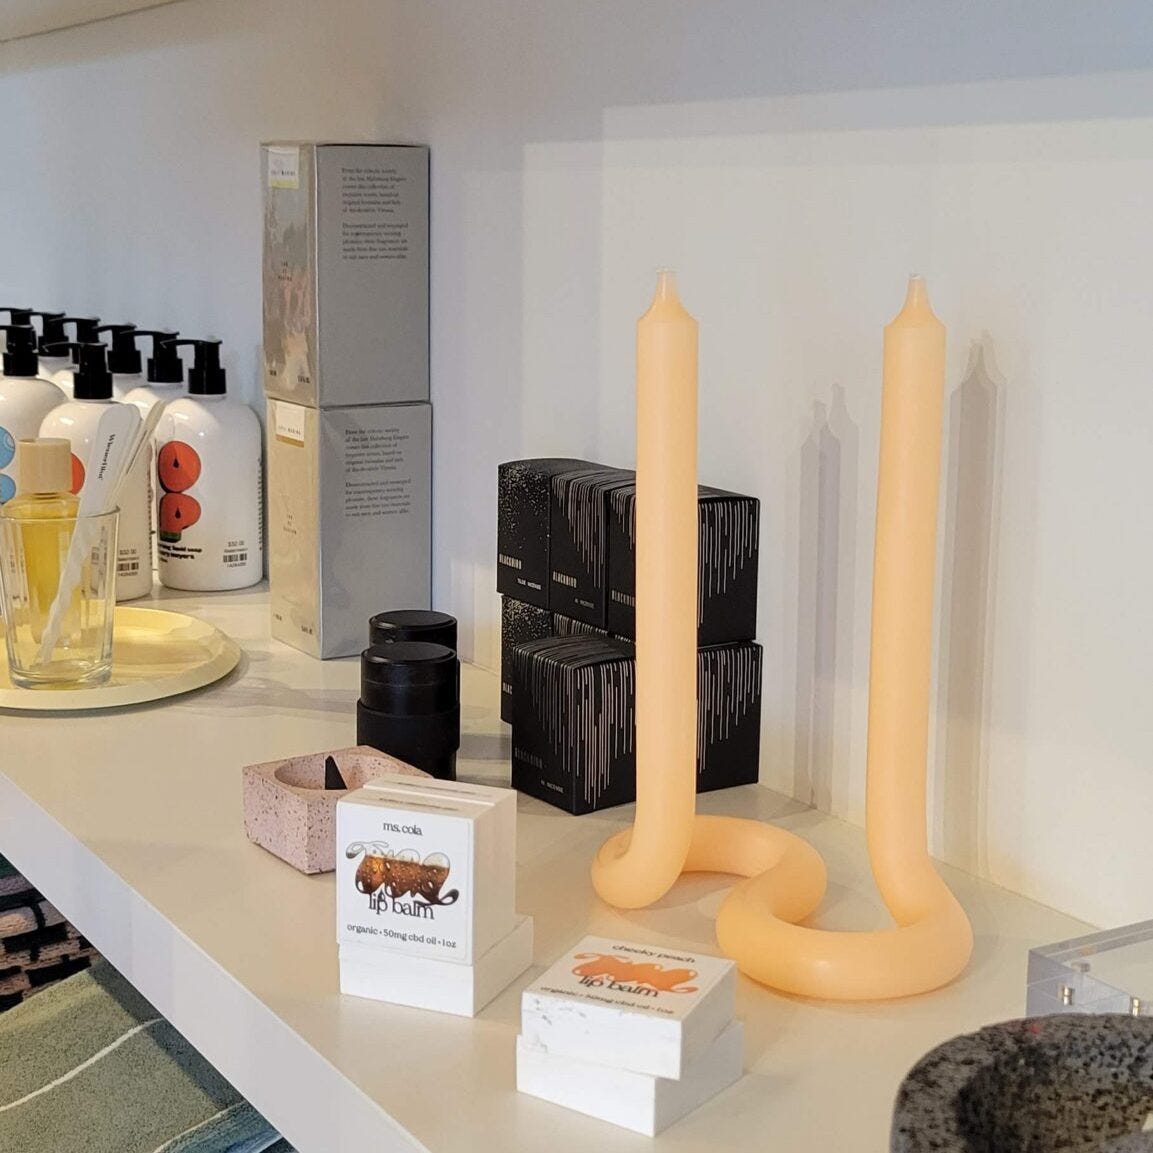 Candlesticks on a shelf